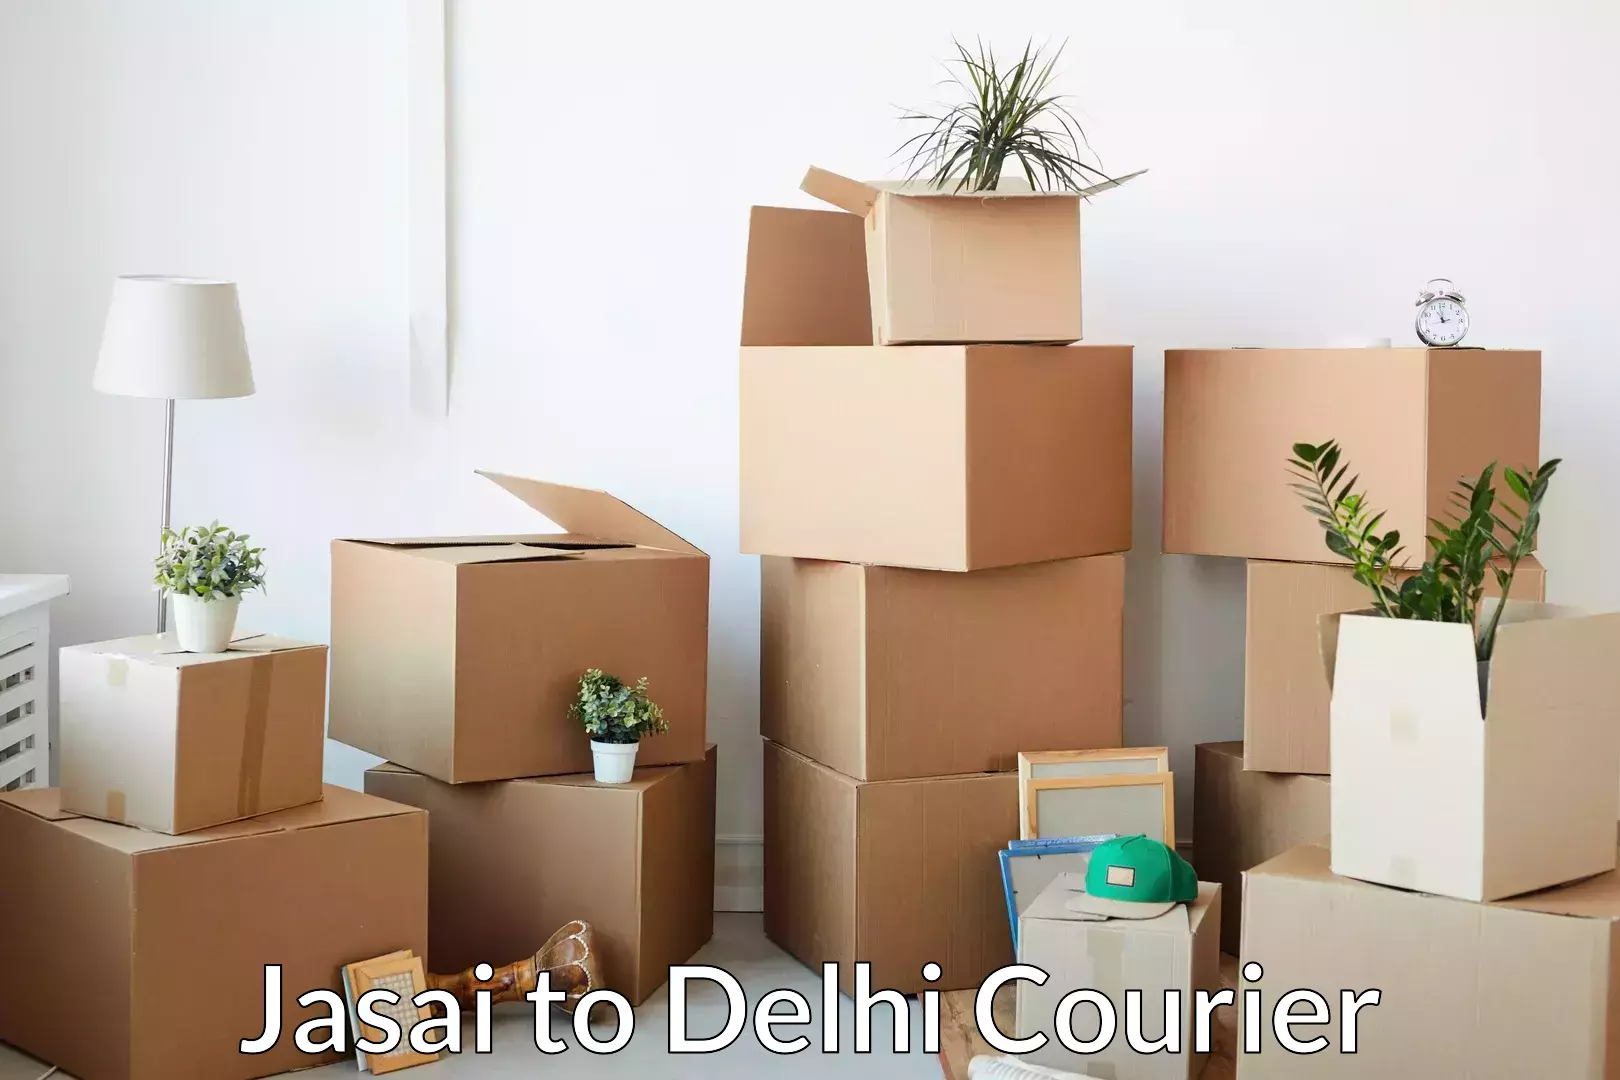 Professional moving company Jasai to East Delhi